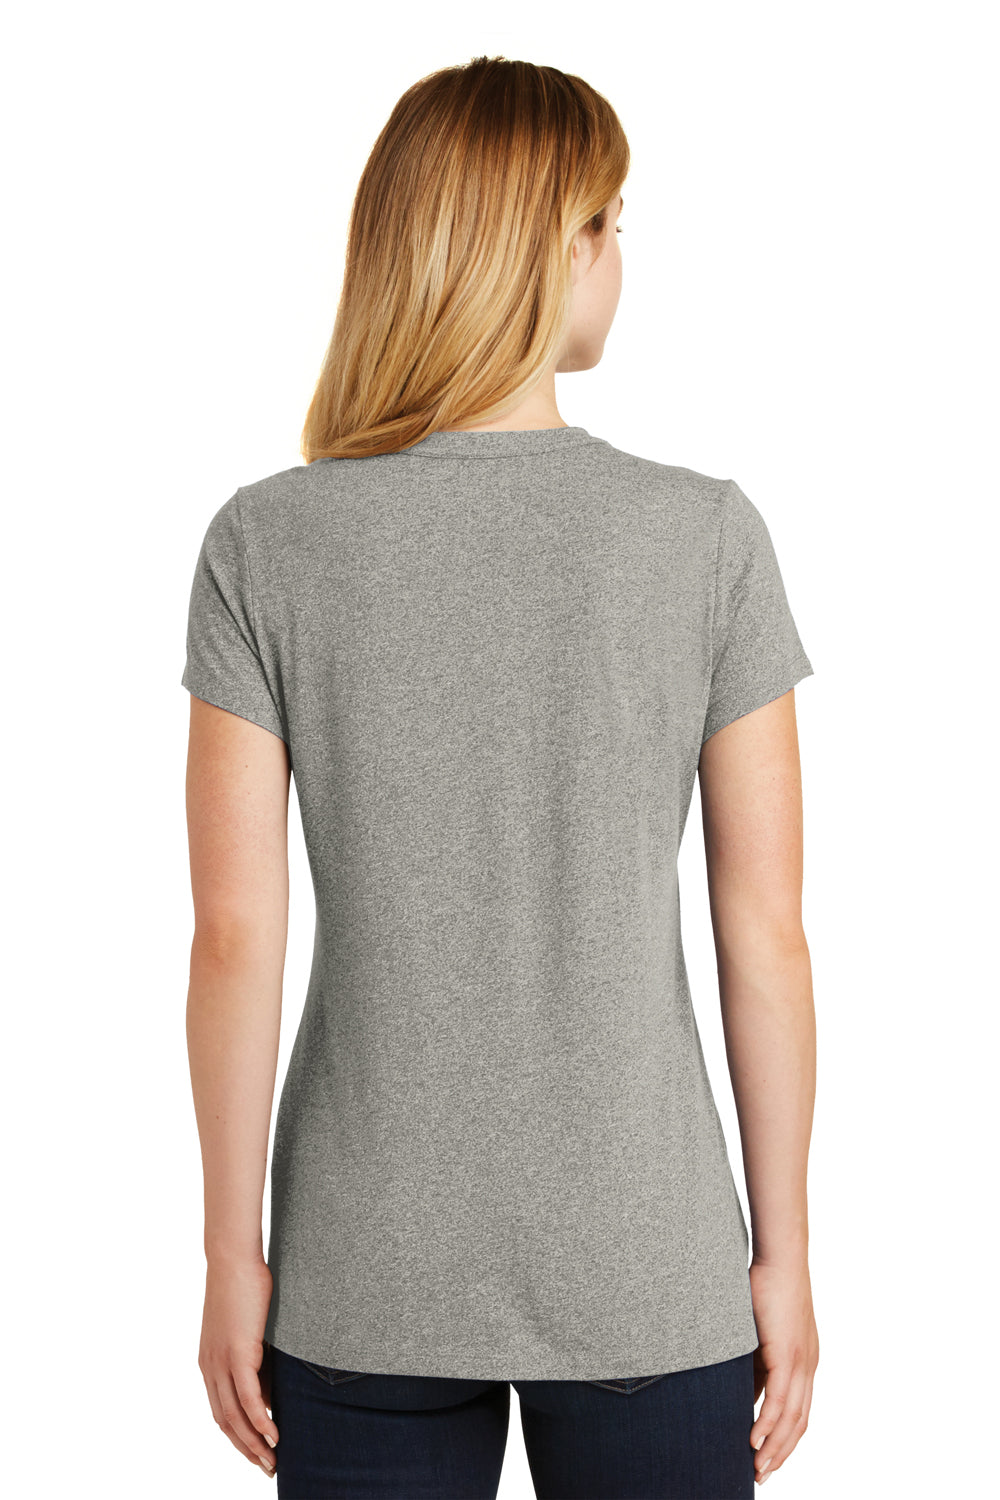 New Era LNEA100 Womens Heritage Short Sleeve Crewneck T-Shirt Heather Rainstorm Grey Back